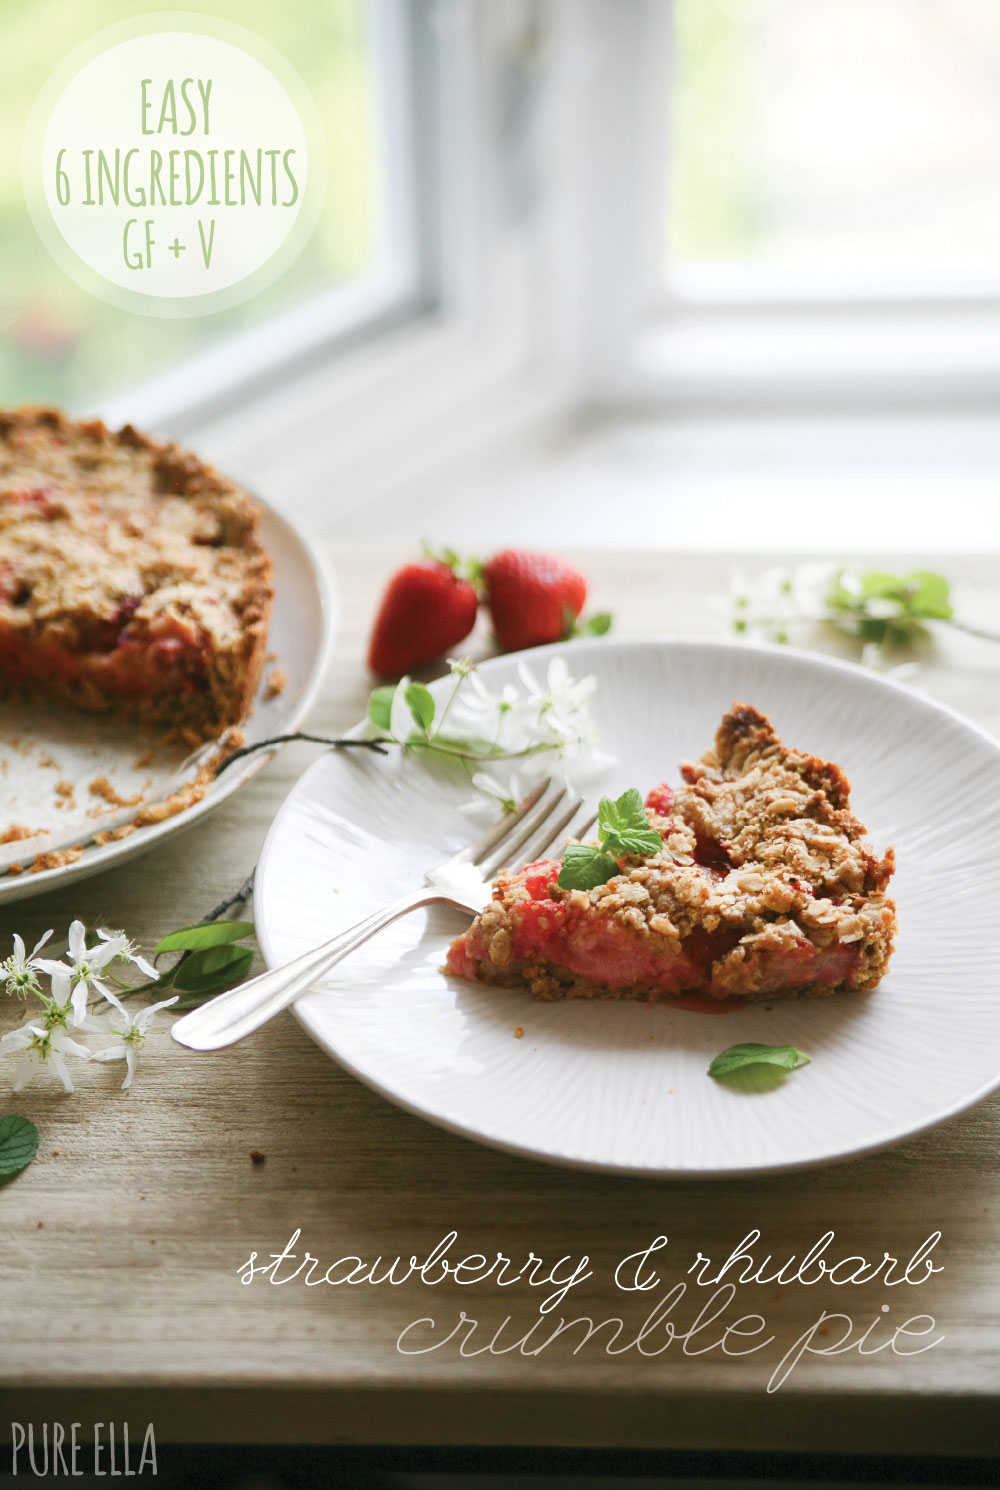 Pure-Ella-Gluten-free-vegan-Strawberry-Rhubarb-Crumble-Pie